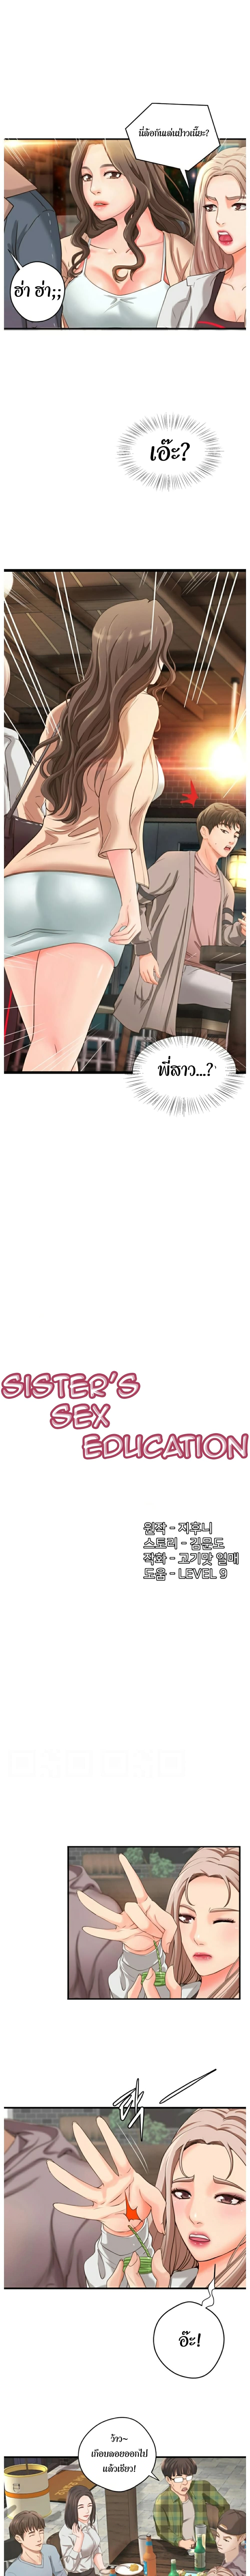 Sister’s Sex Education 5 (2)